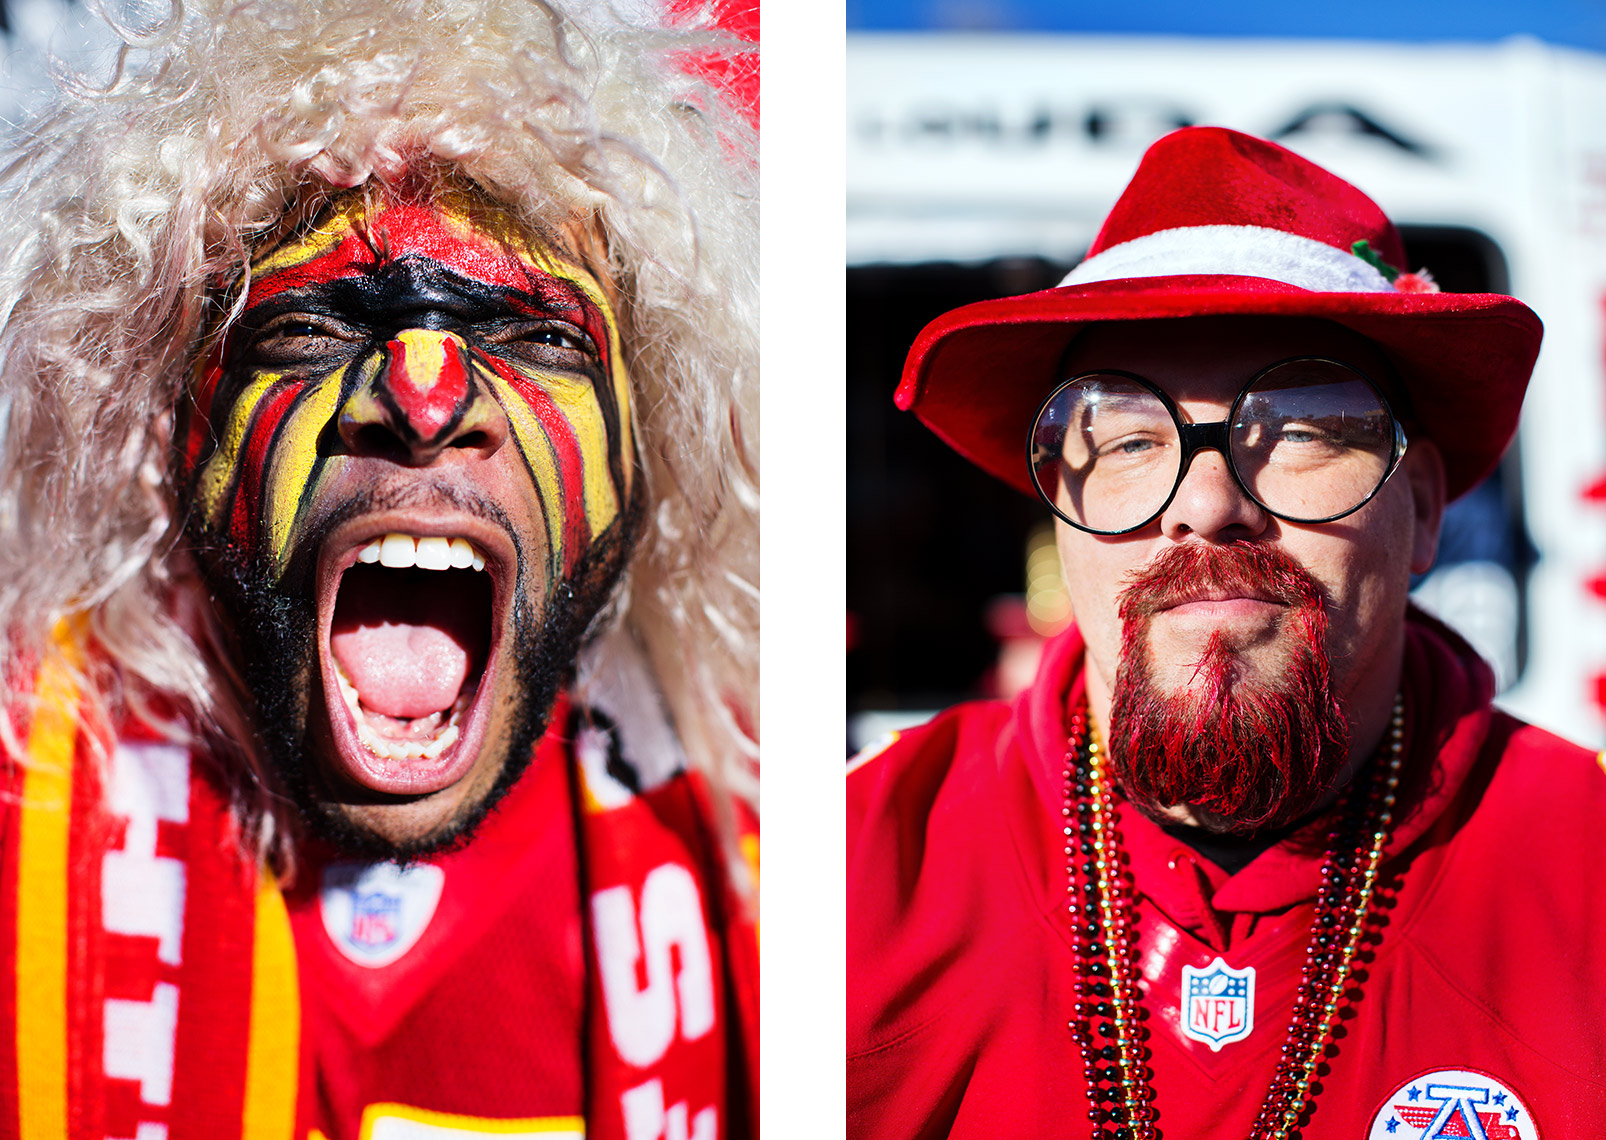 Sports Photographer STEVE BOYLE - Kansas City Chiefs Fans - NFL Football